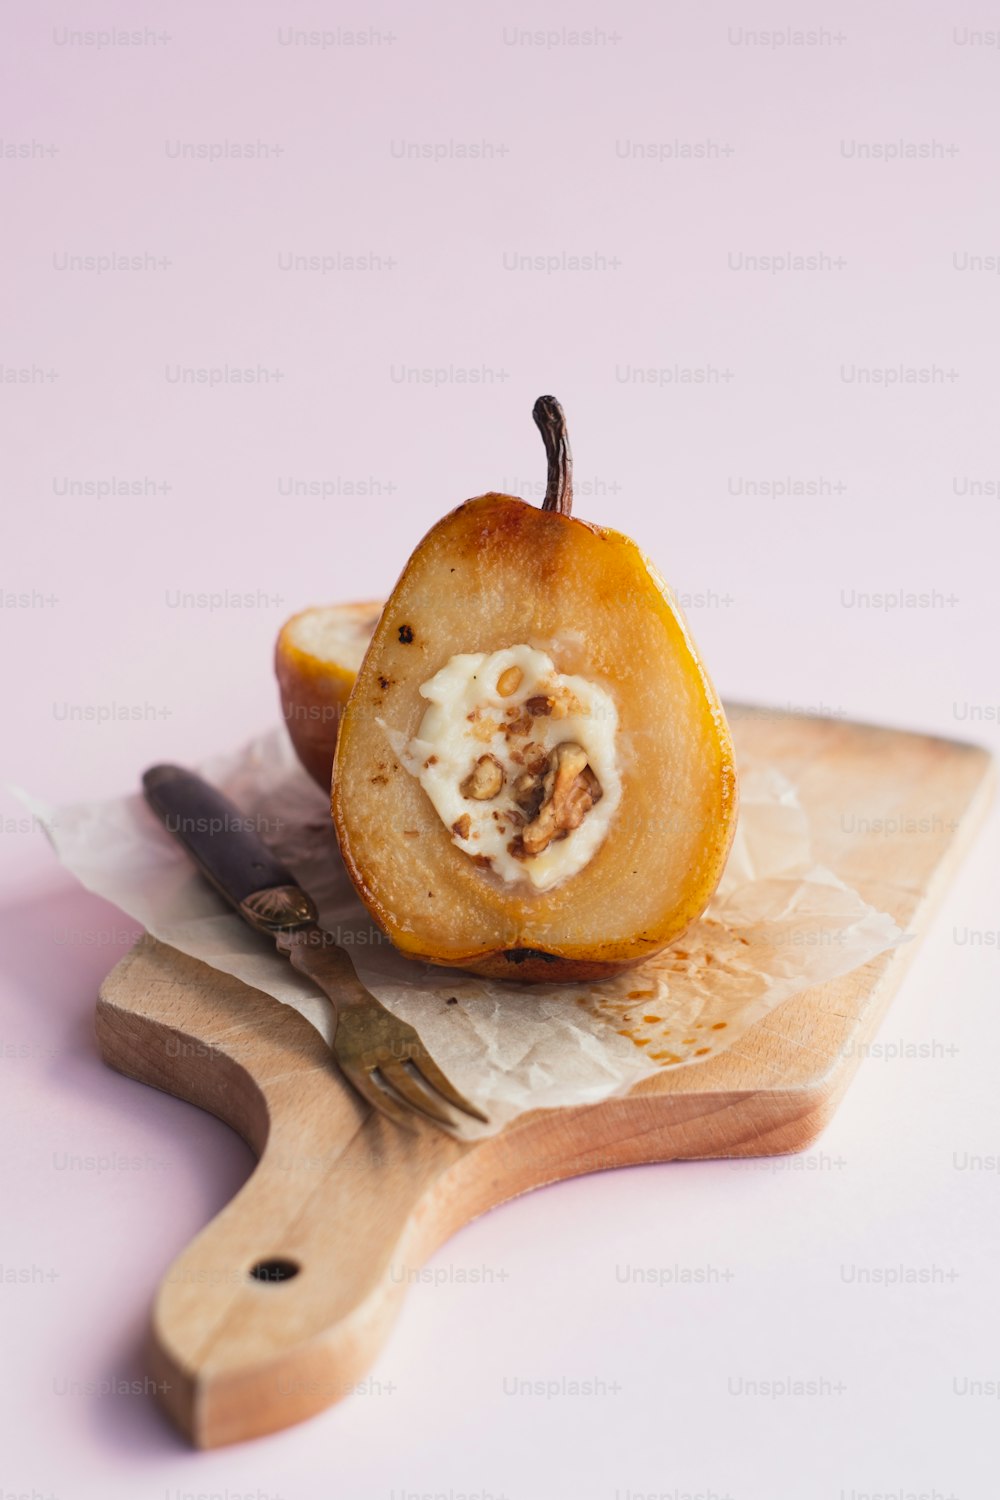 a half eaten pear sitting on top of a cutting board